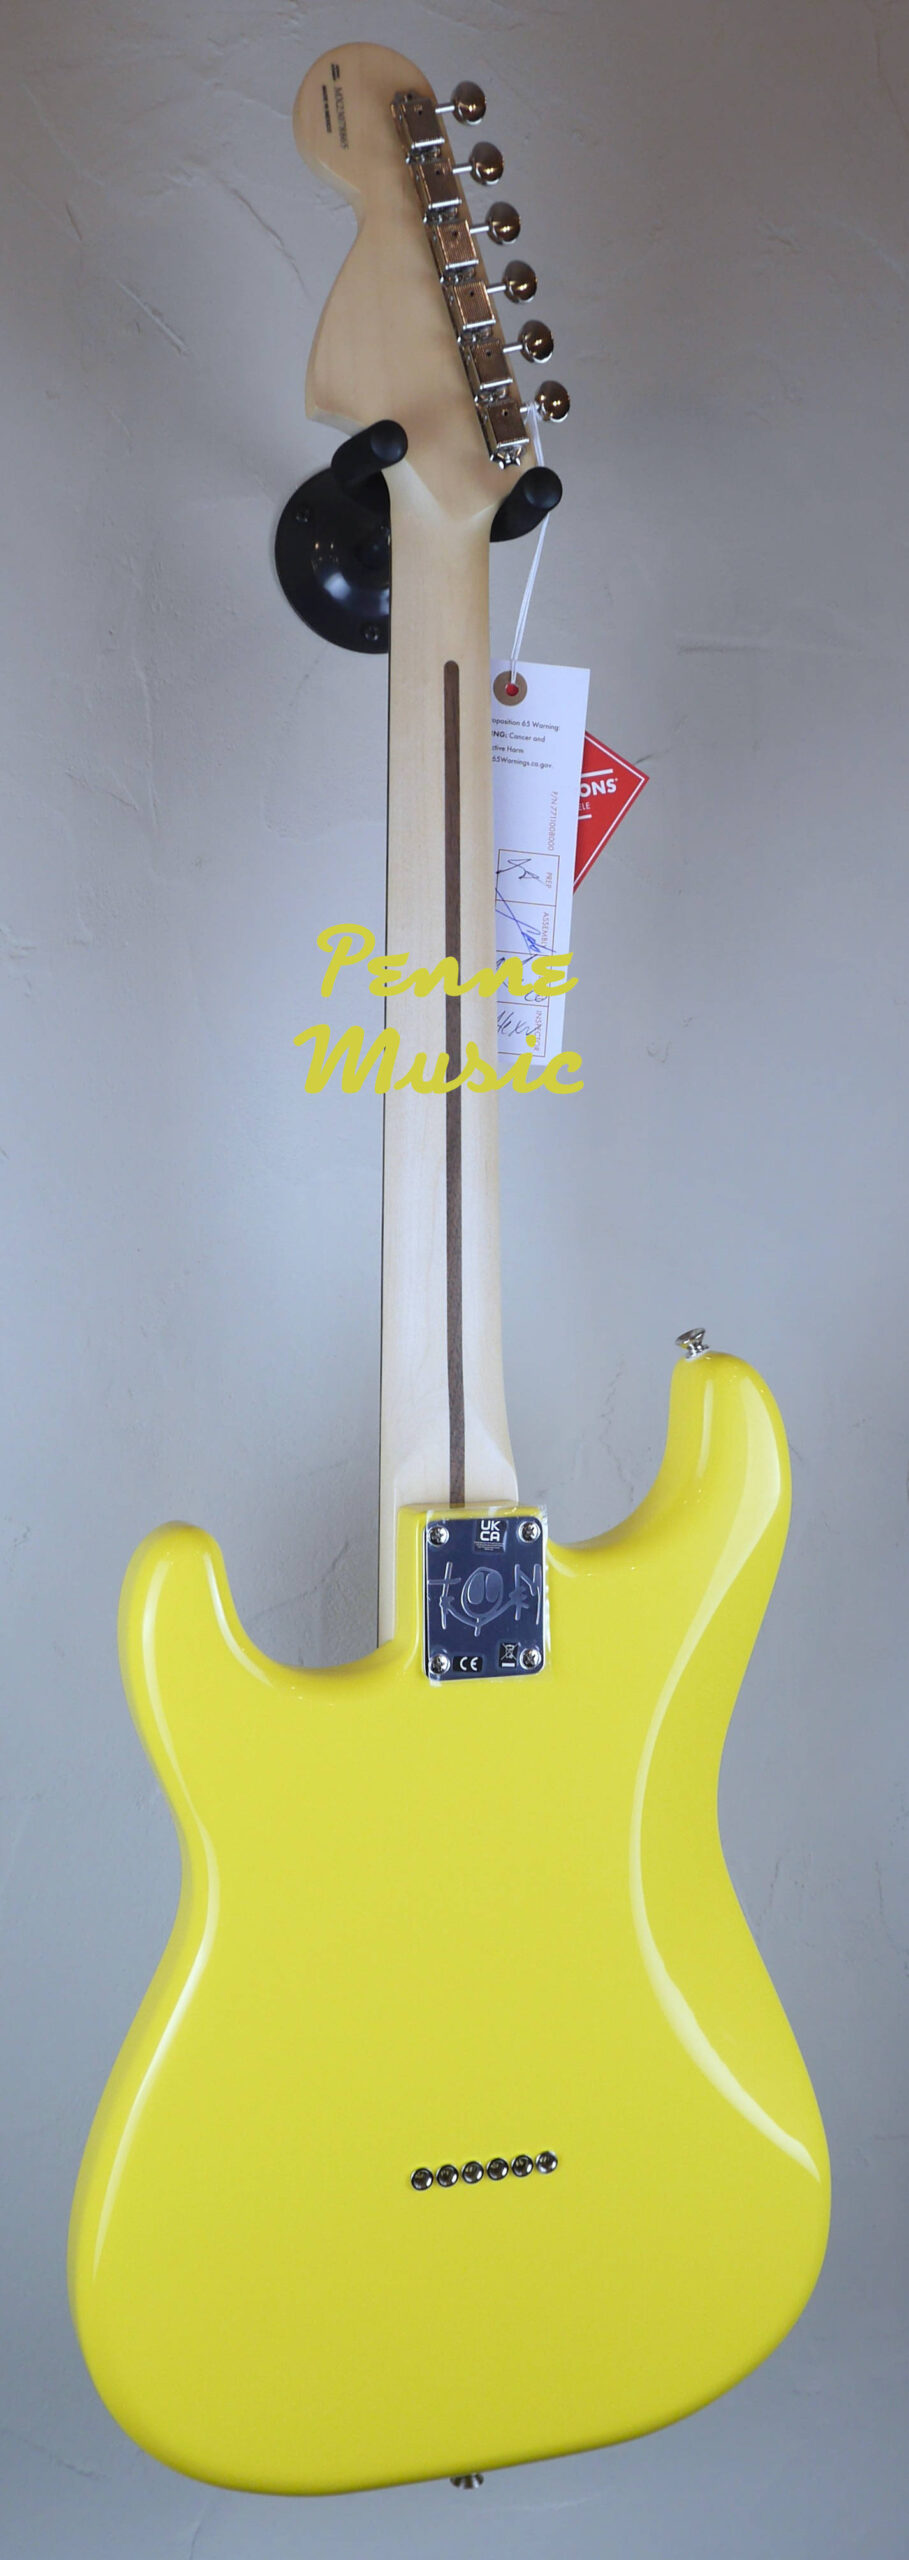 Fender Limited Edition Tom Delonge Stratocaster Graffiti Yellow 2